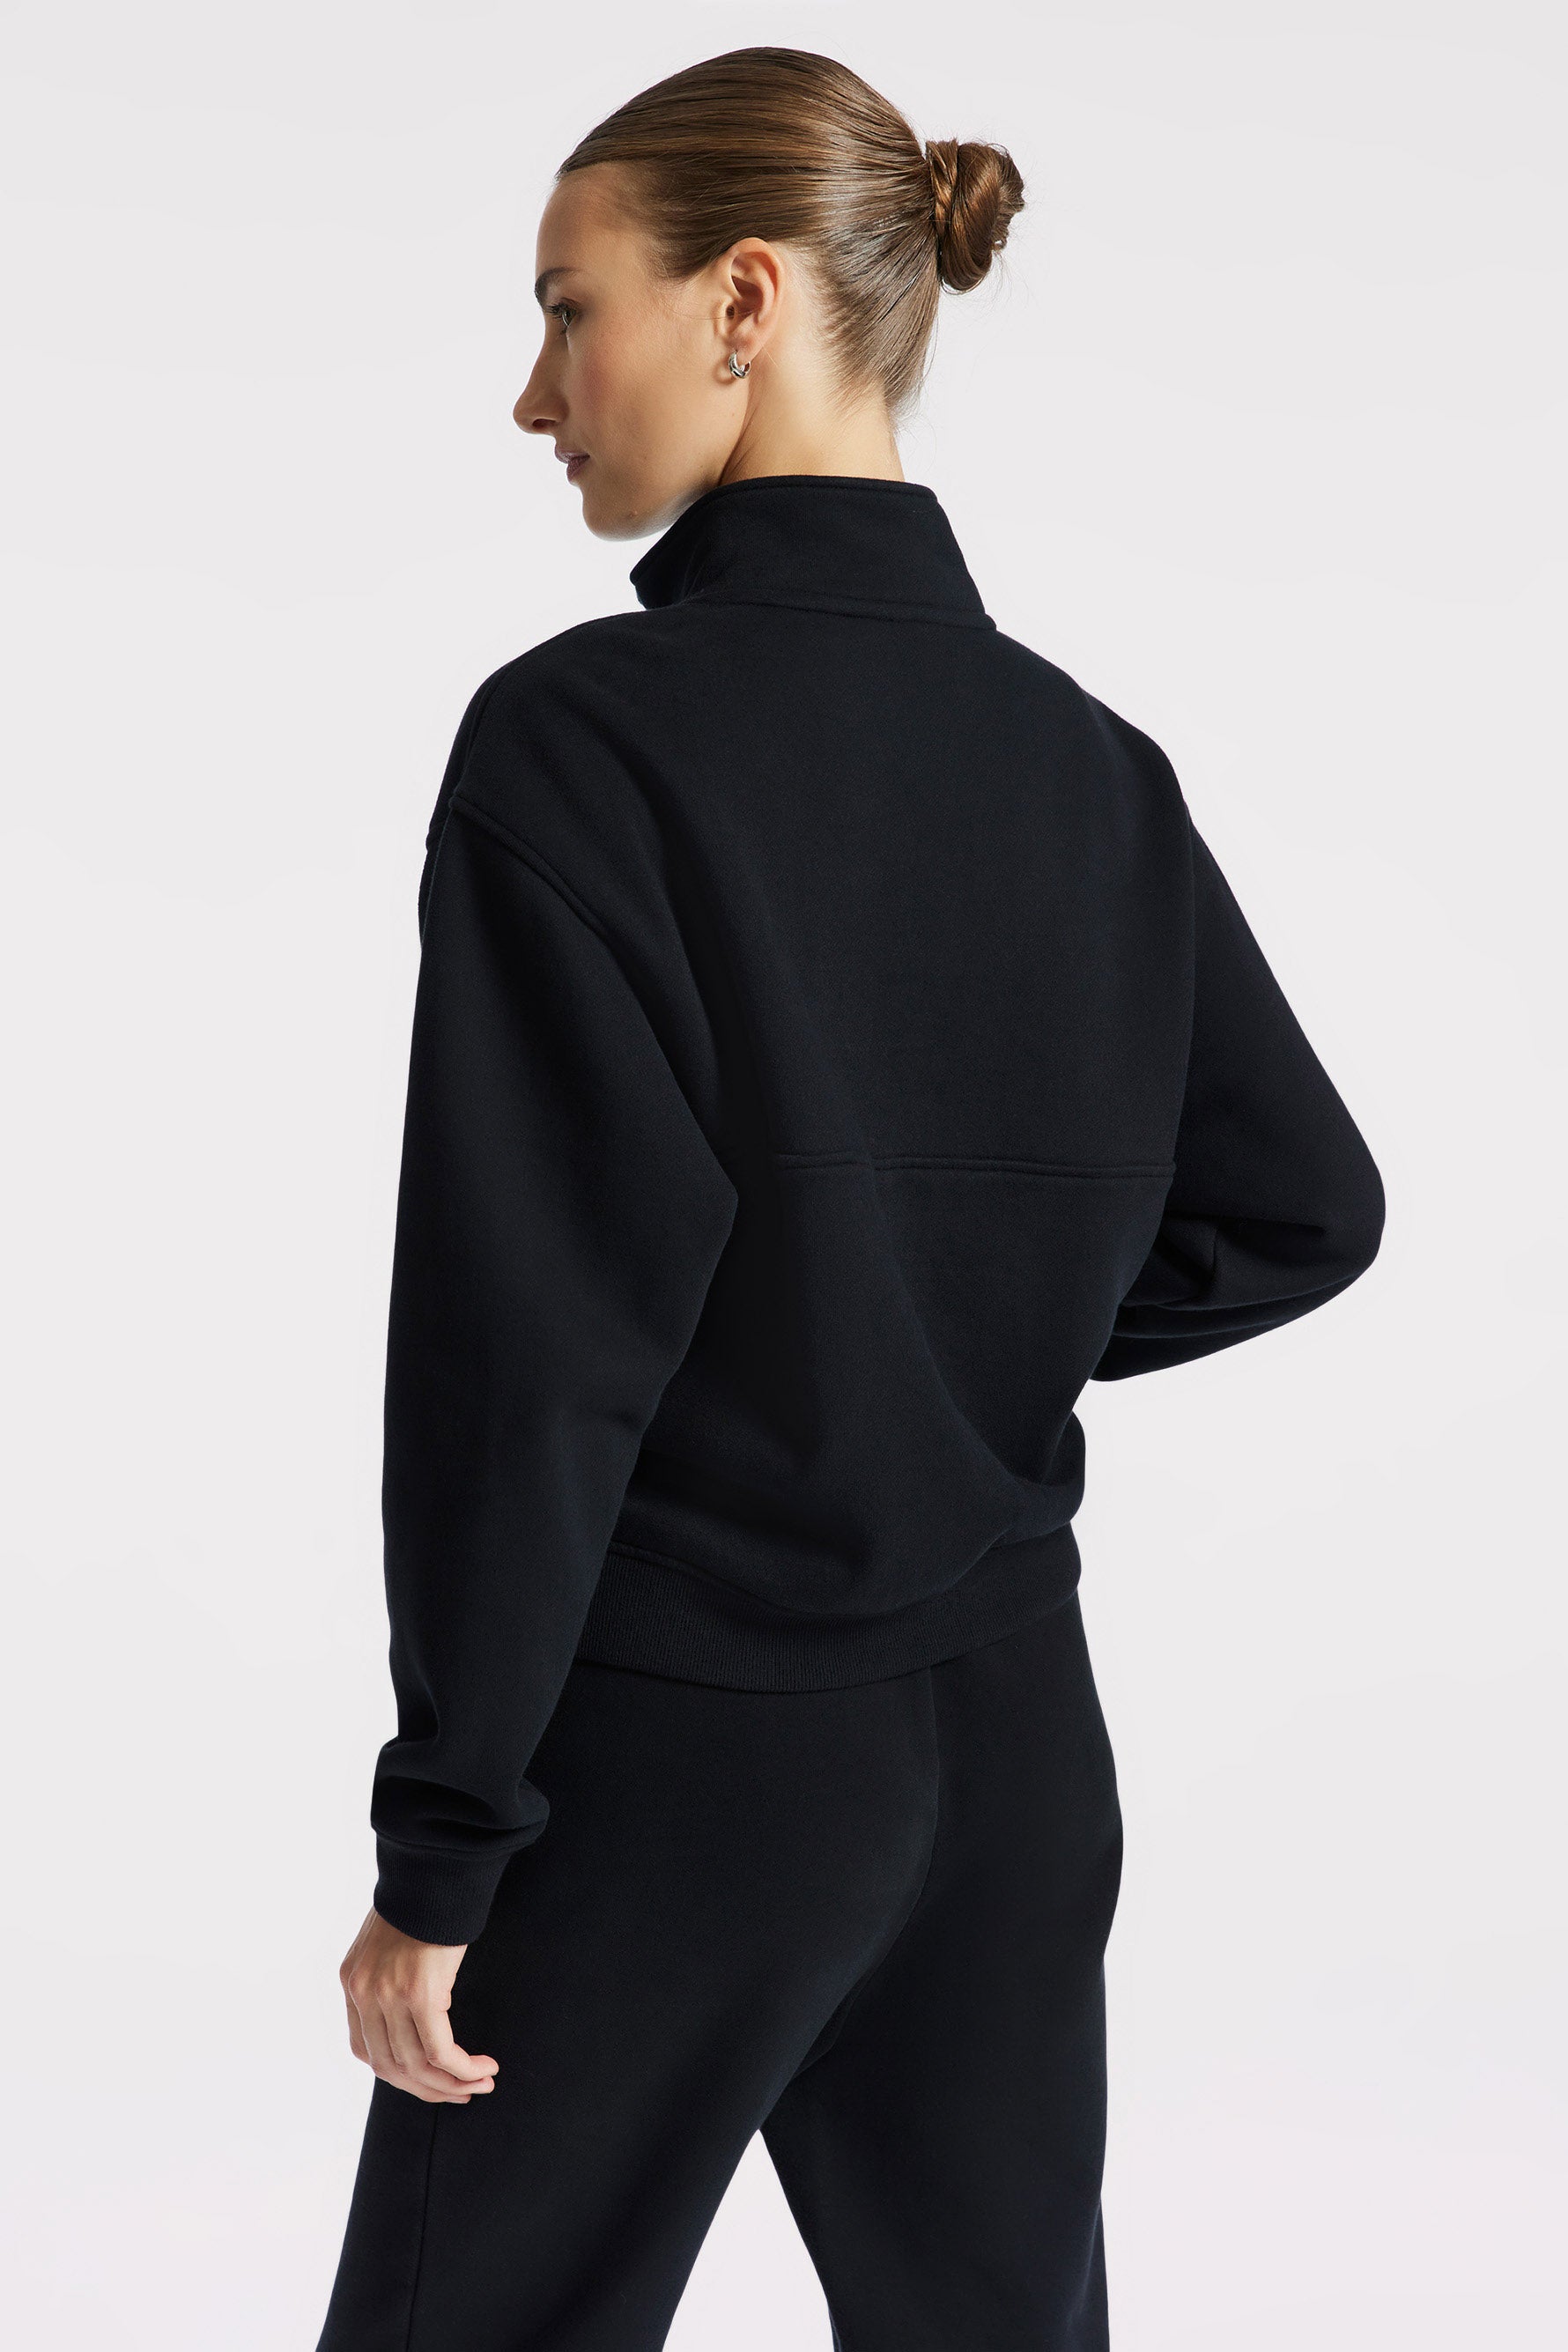 Bandier Les Sports Half Zip Pullover Sweatshirt - Black/ White